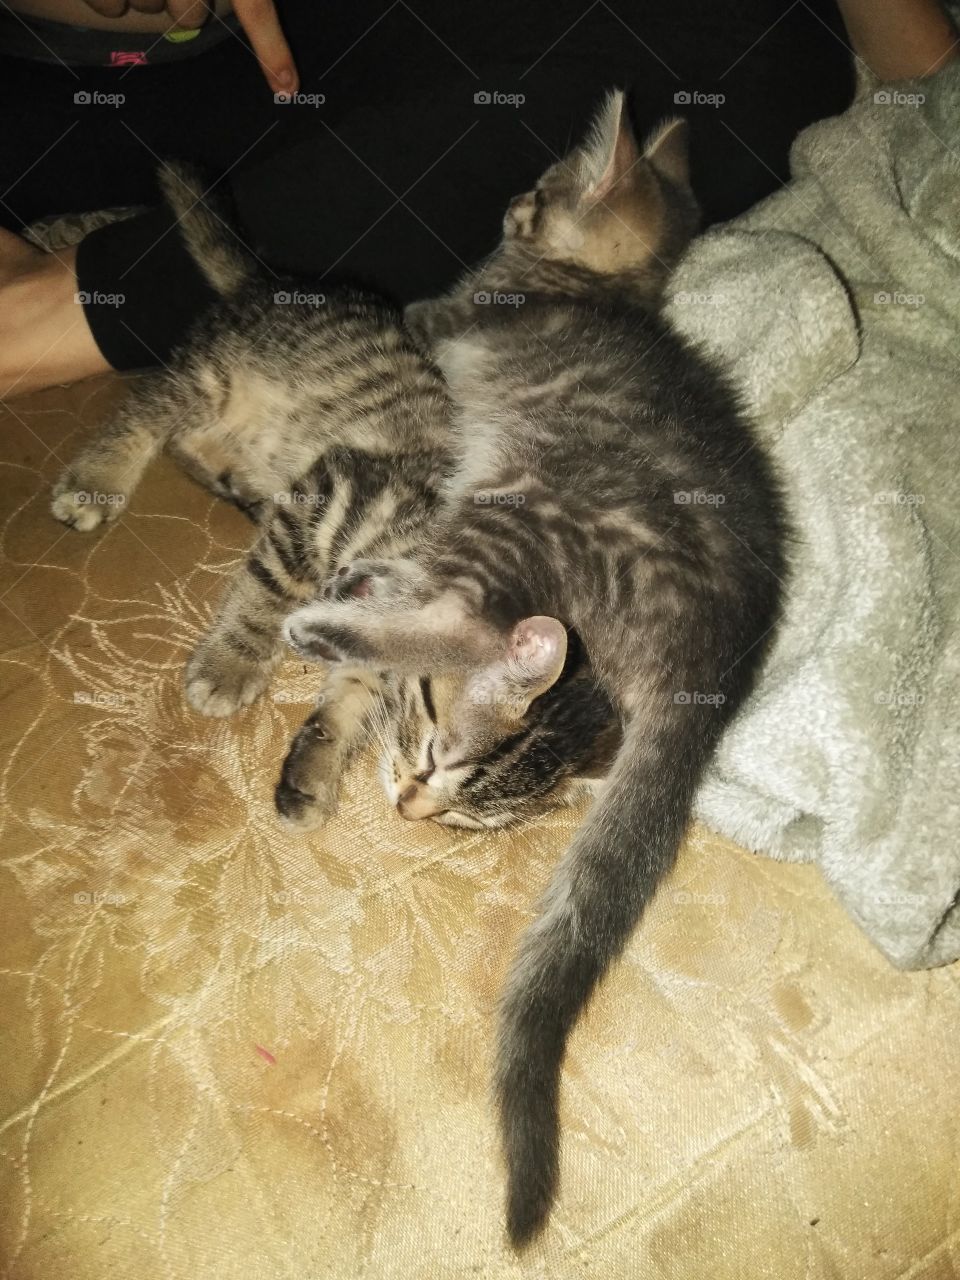 cuddling kitty